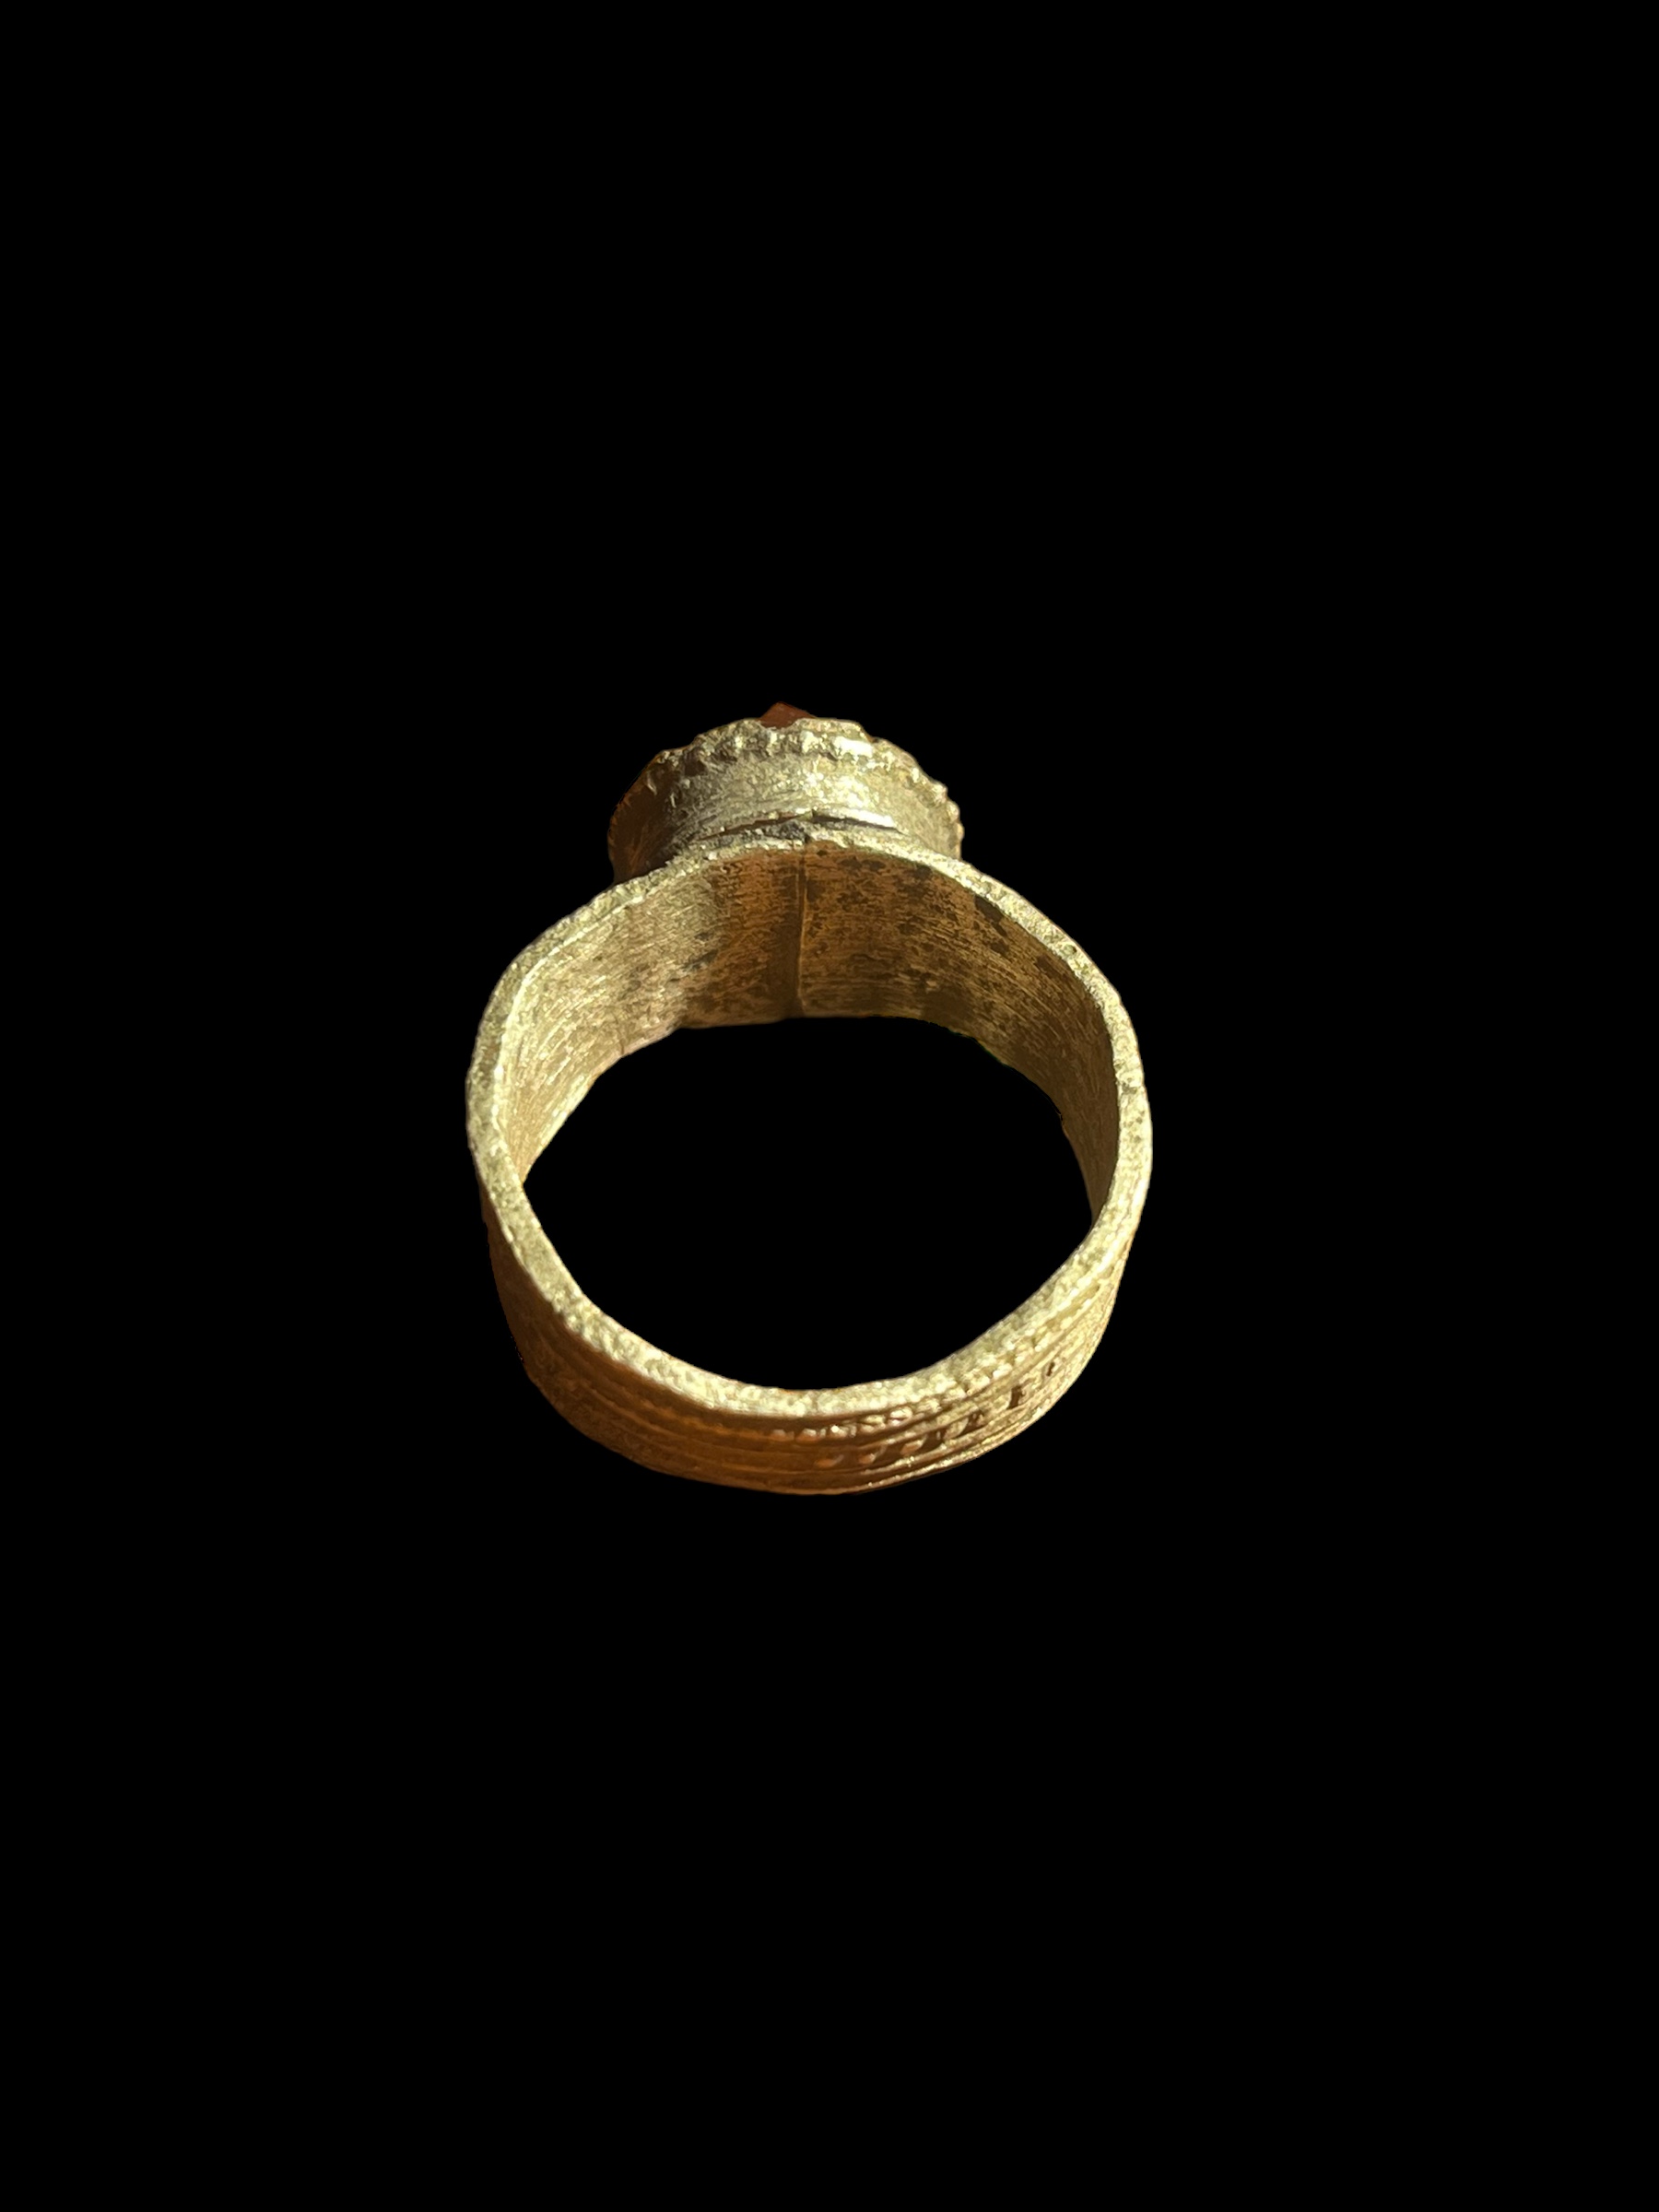 Vintage Near Eastern White Metal Ring - Image 2 of 2